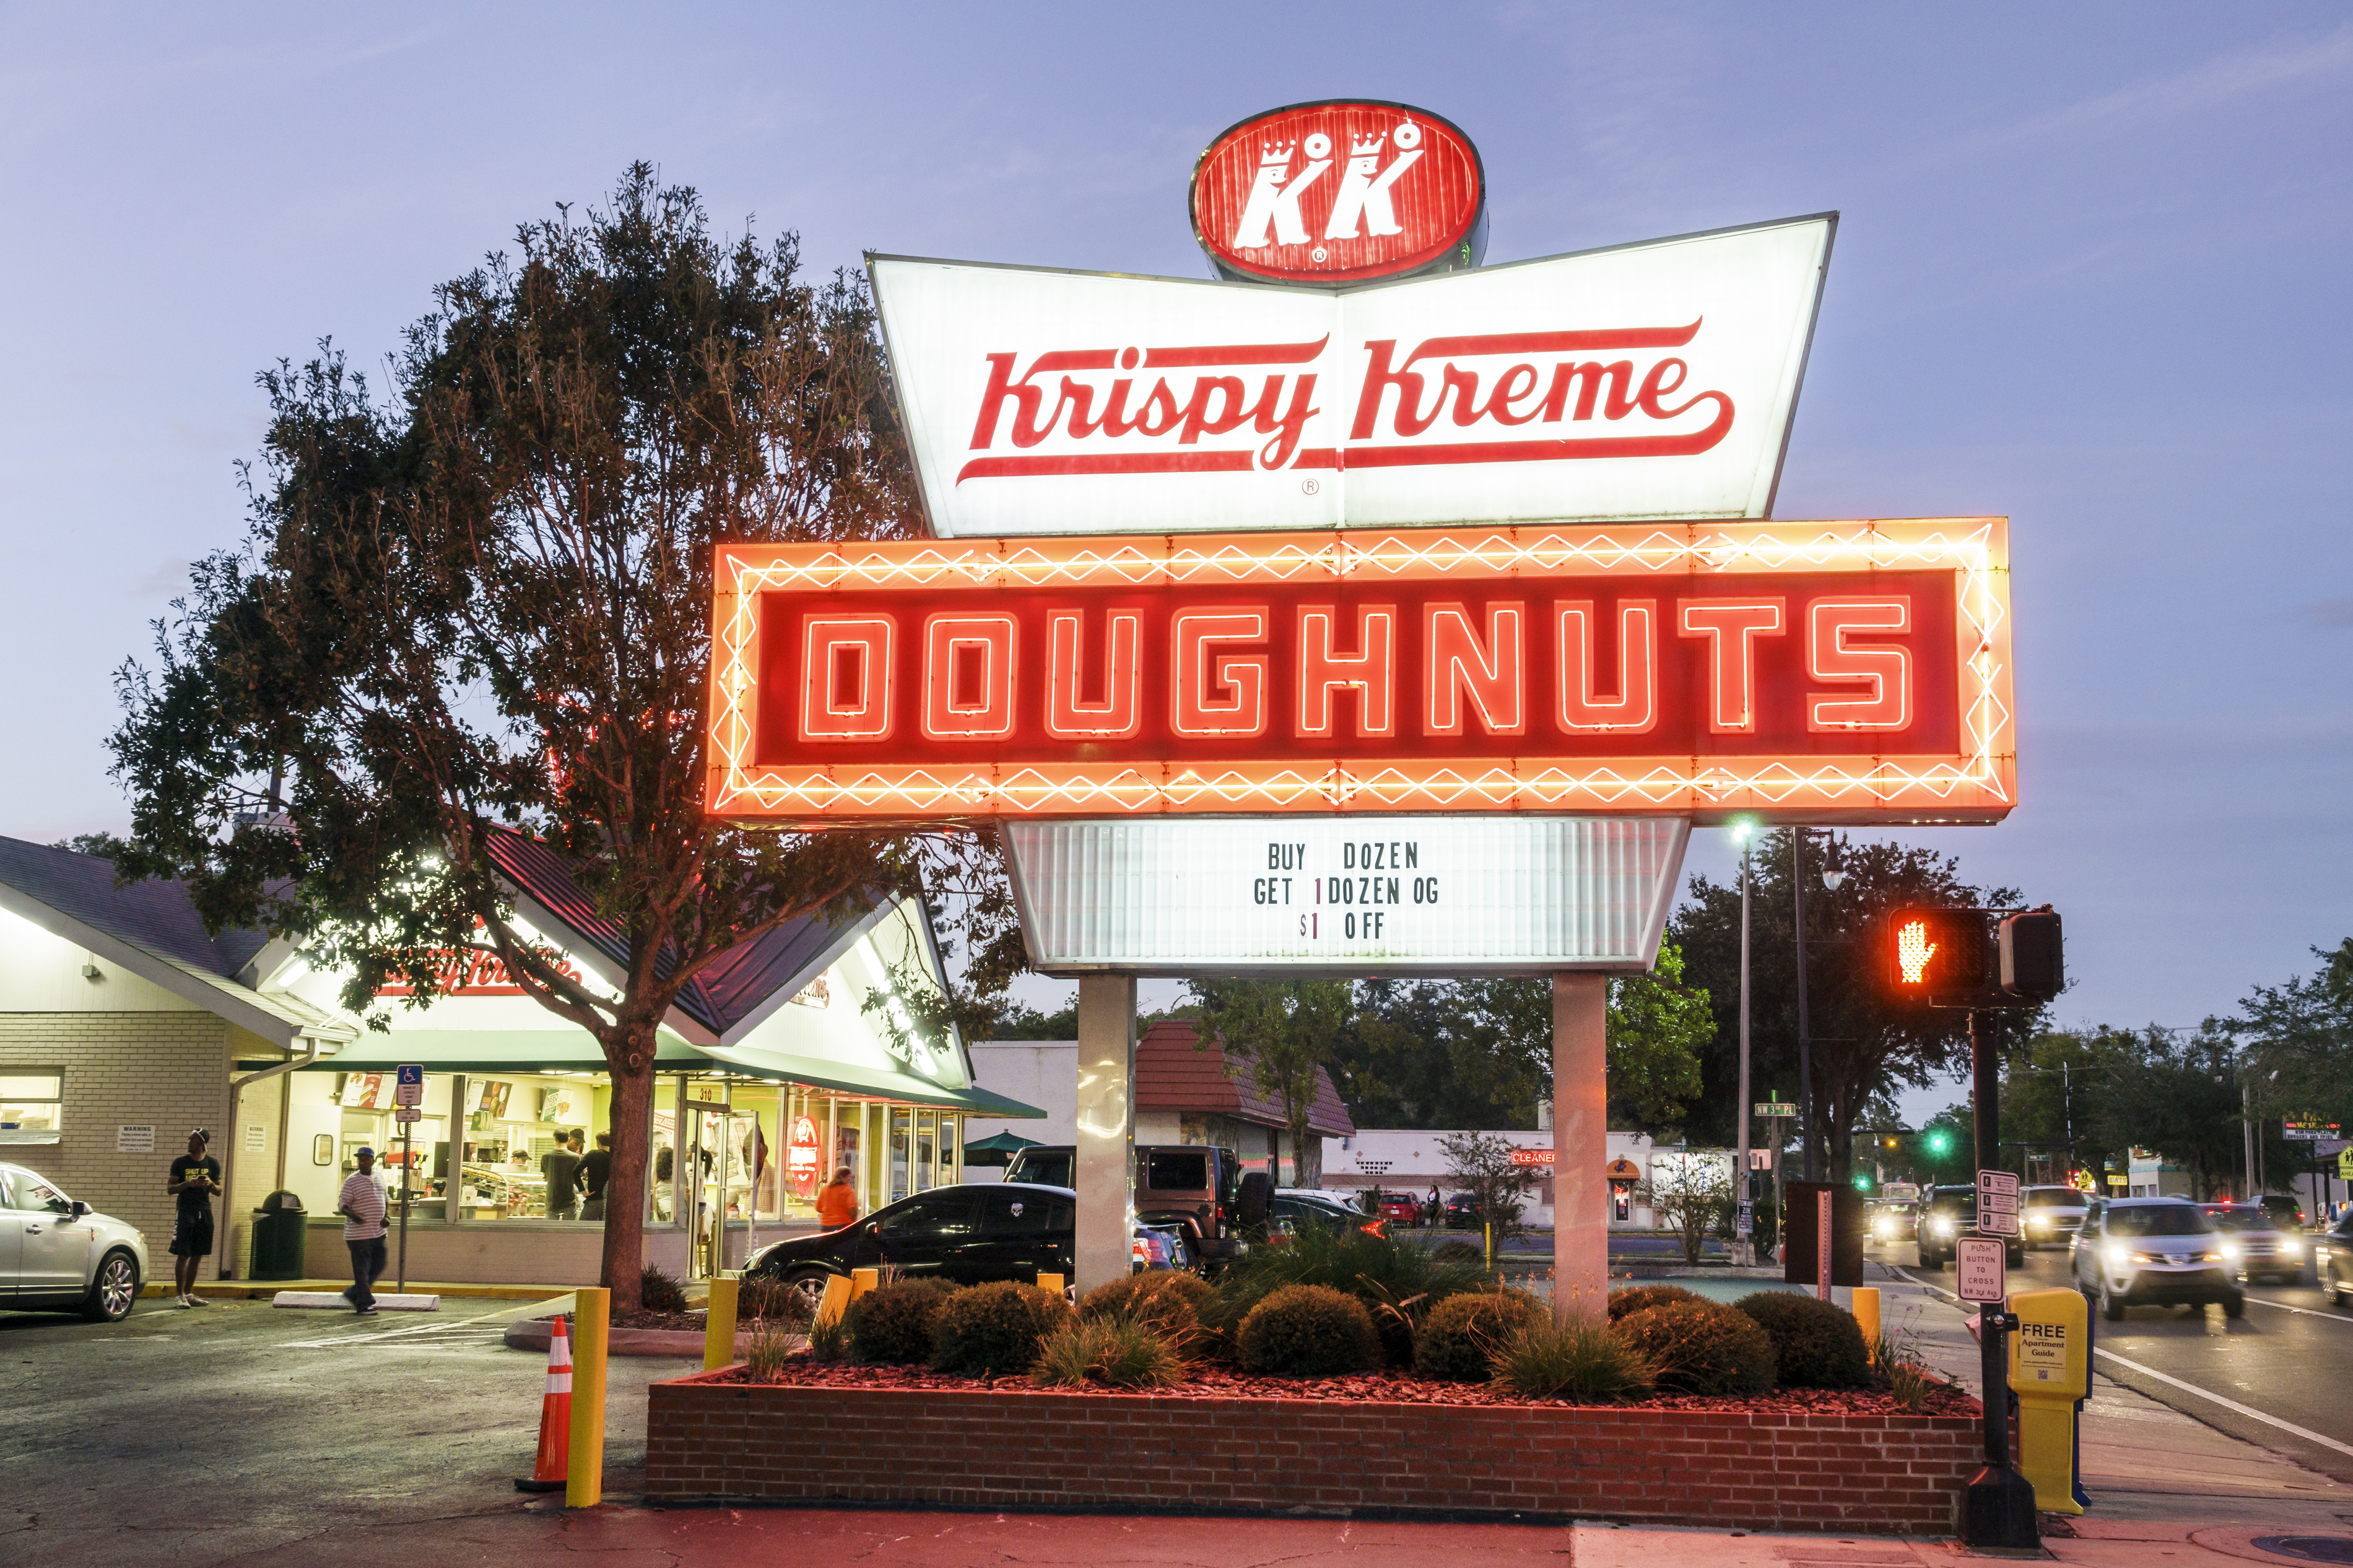 Gainesville, Krispy Kreme Doughnuts. (Photo by: Jeffrey Greenberg/UIG via Getty Images) (Jeff Greenberg&amp;UIG via Getty Images)